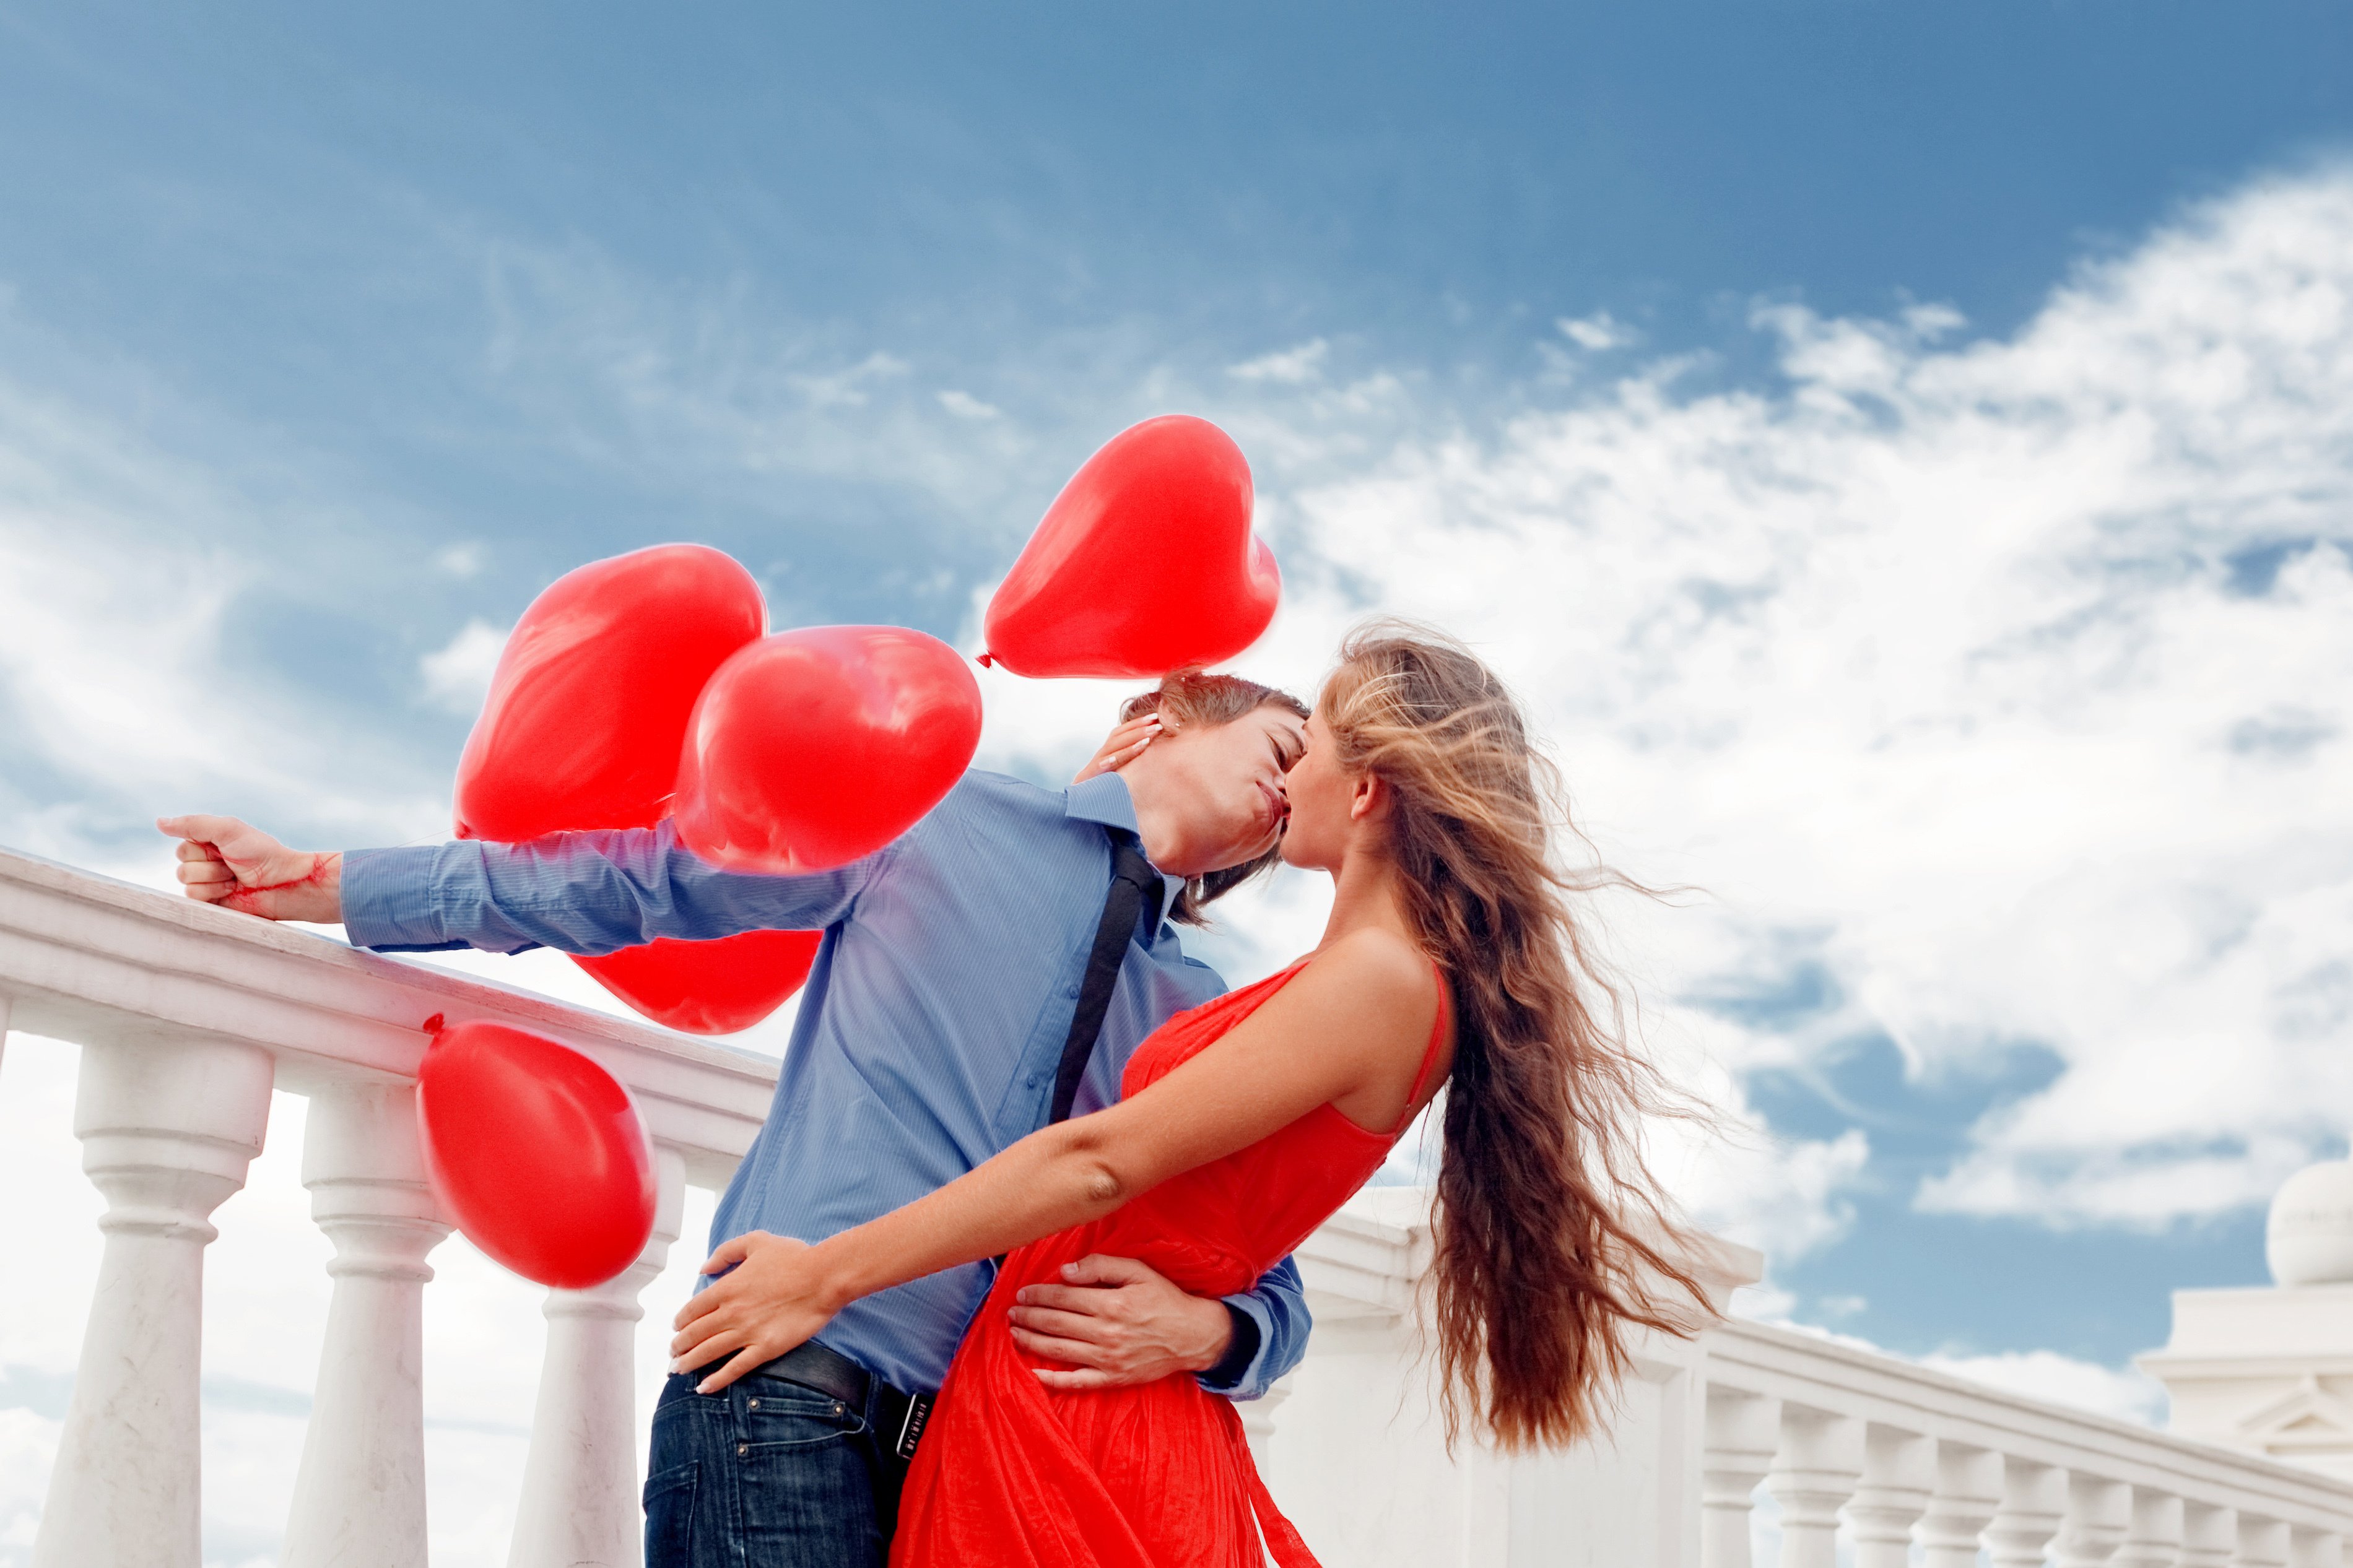 Girl Guy Love Couple Hug Kiss Love Romance Affection Dress Red Balloons Hearts